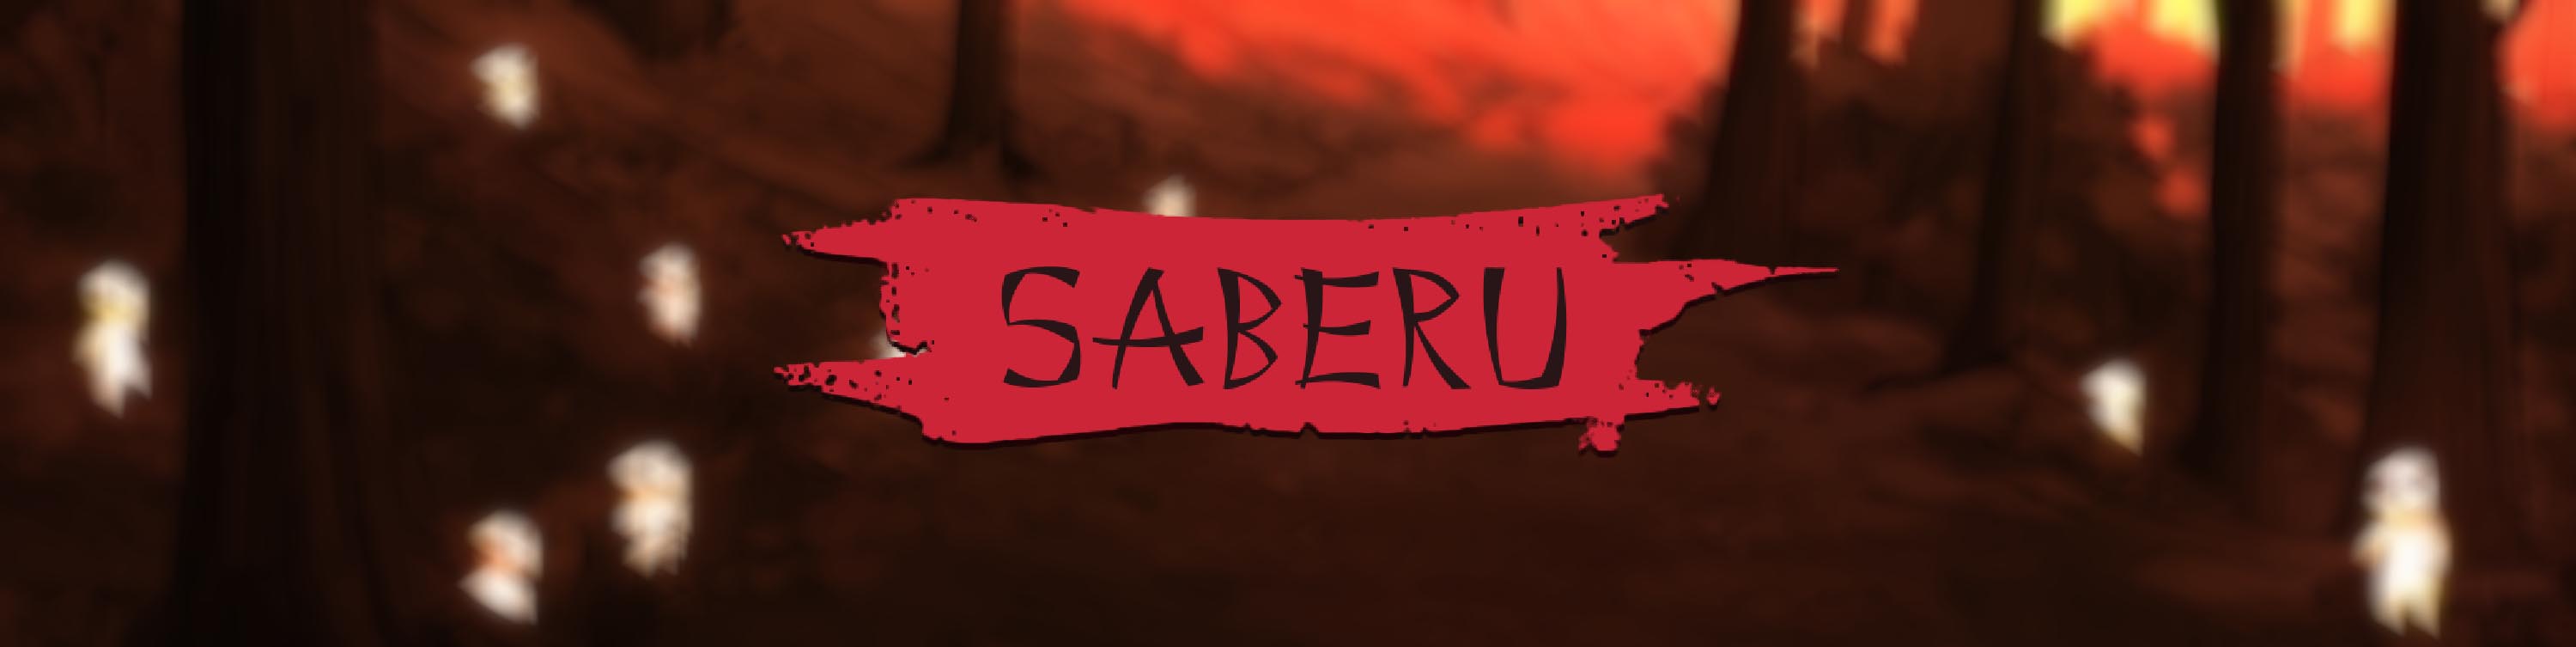 Saberu